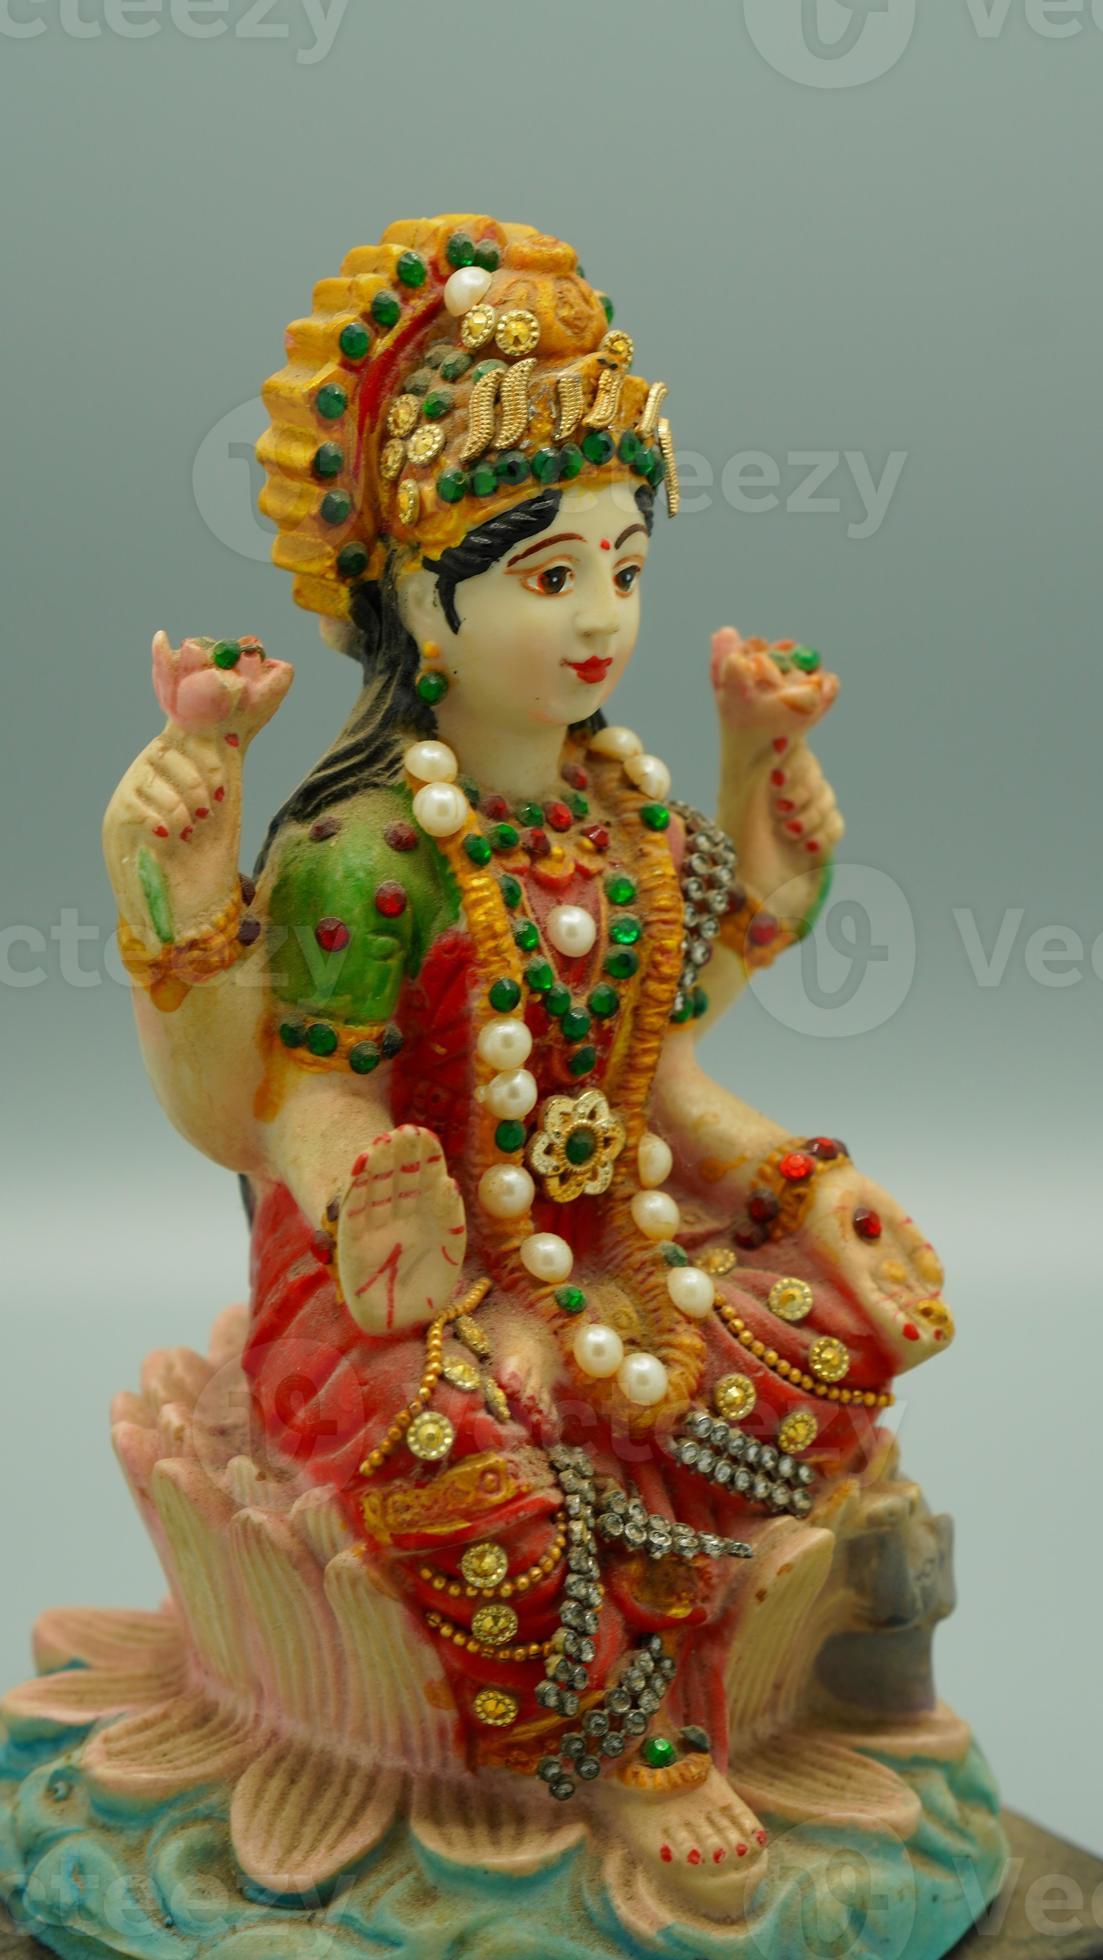 hindu god laxmi mata image hd on white background 10601612 Stock Photo at  Vecteezy